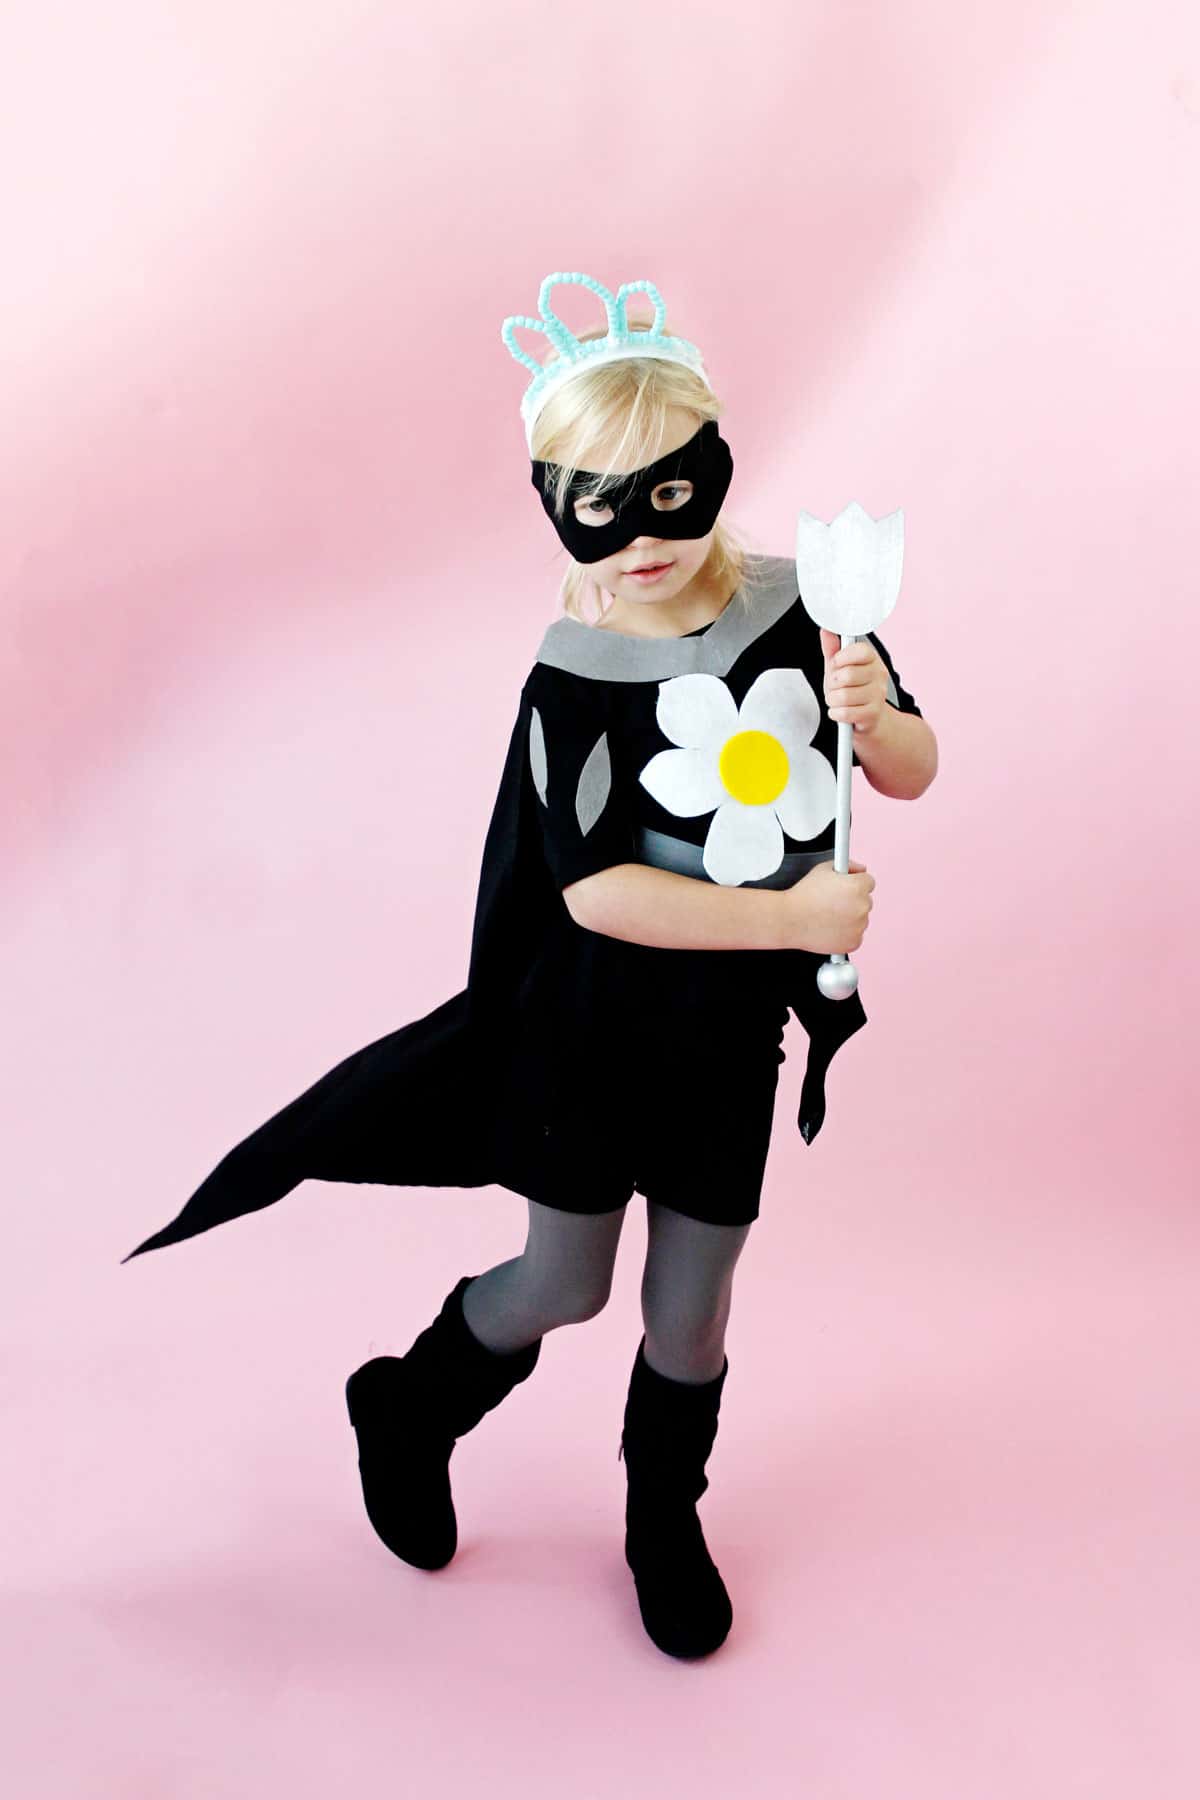 black princess costume for kids